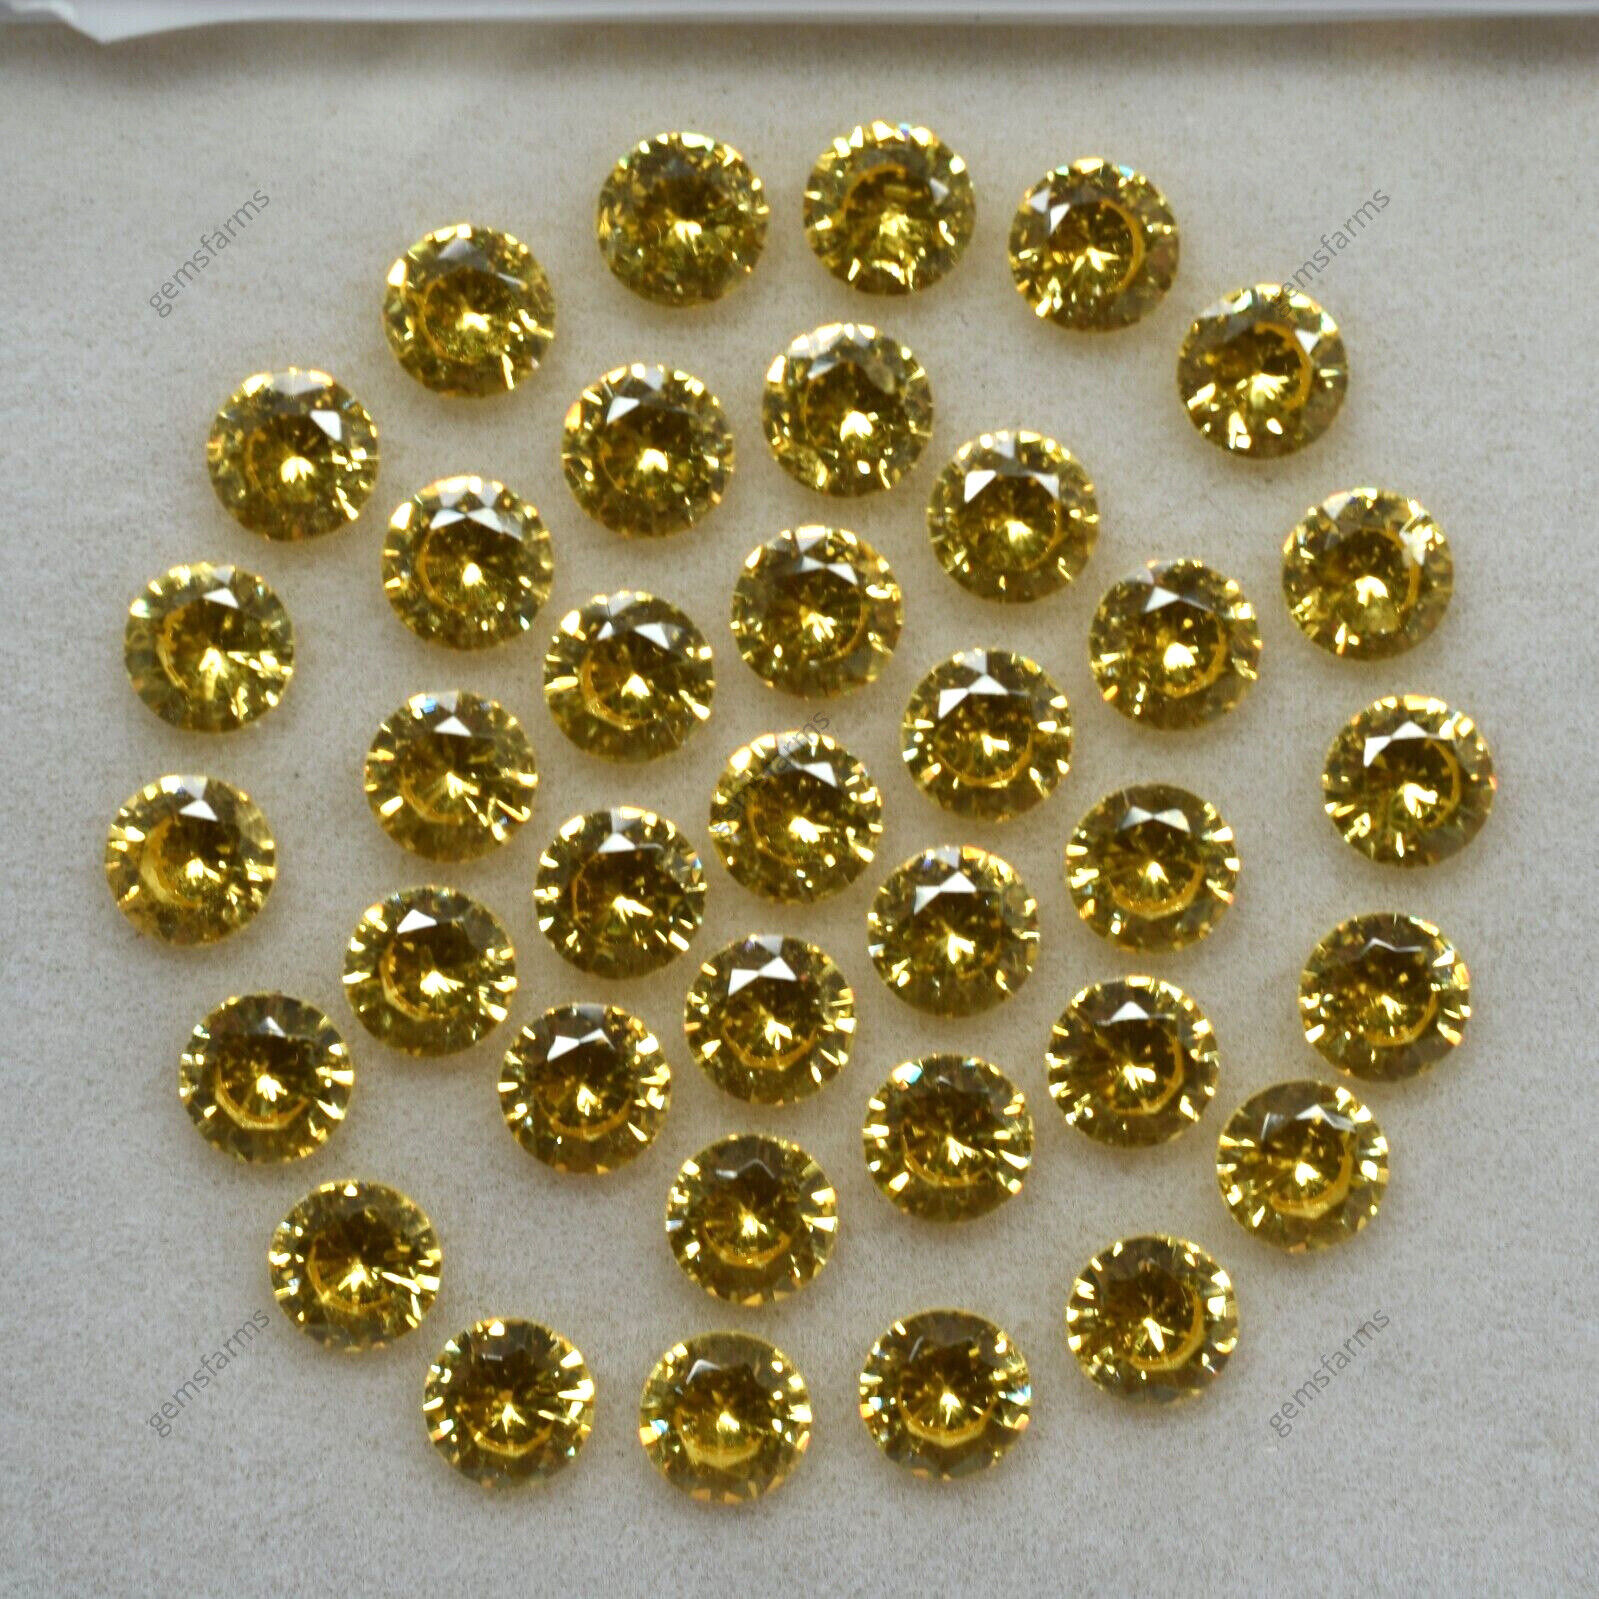 16 PCS Natural Yellow Sapphire Gemstone CERTIFIED Lot 5 MM Round Diamond Cut